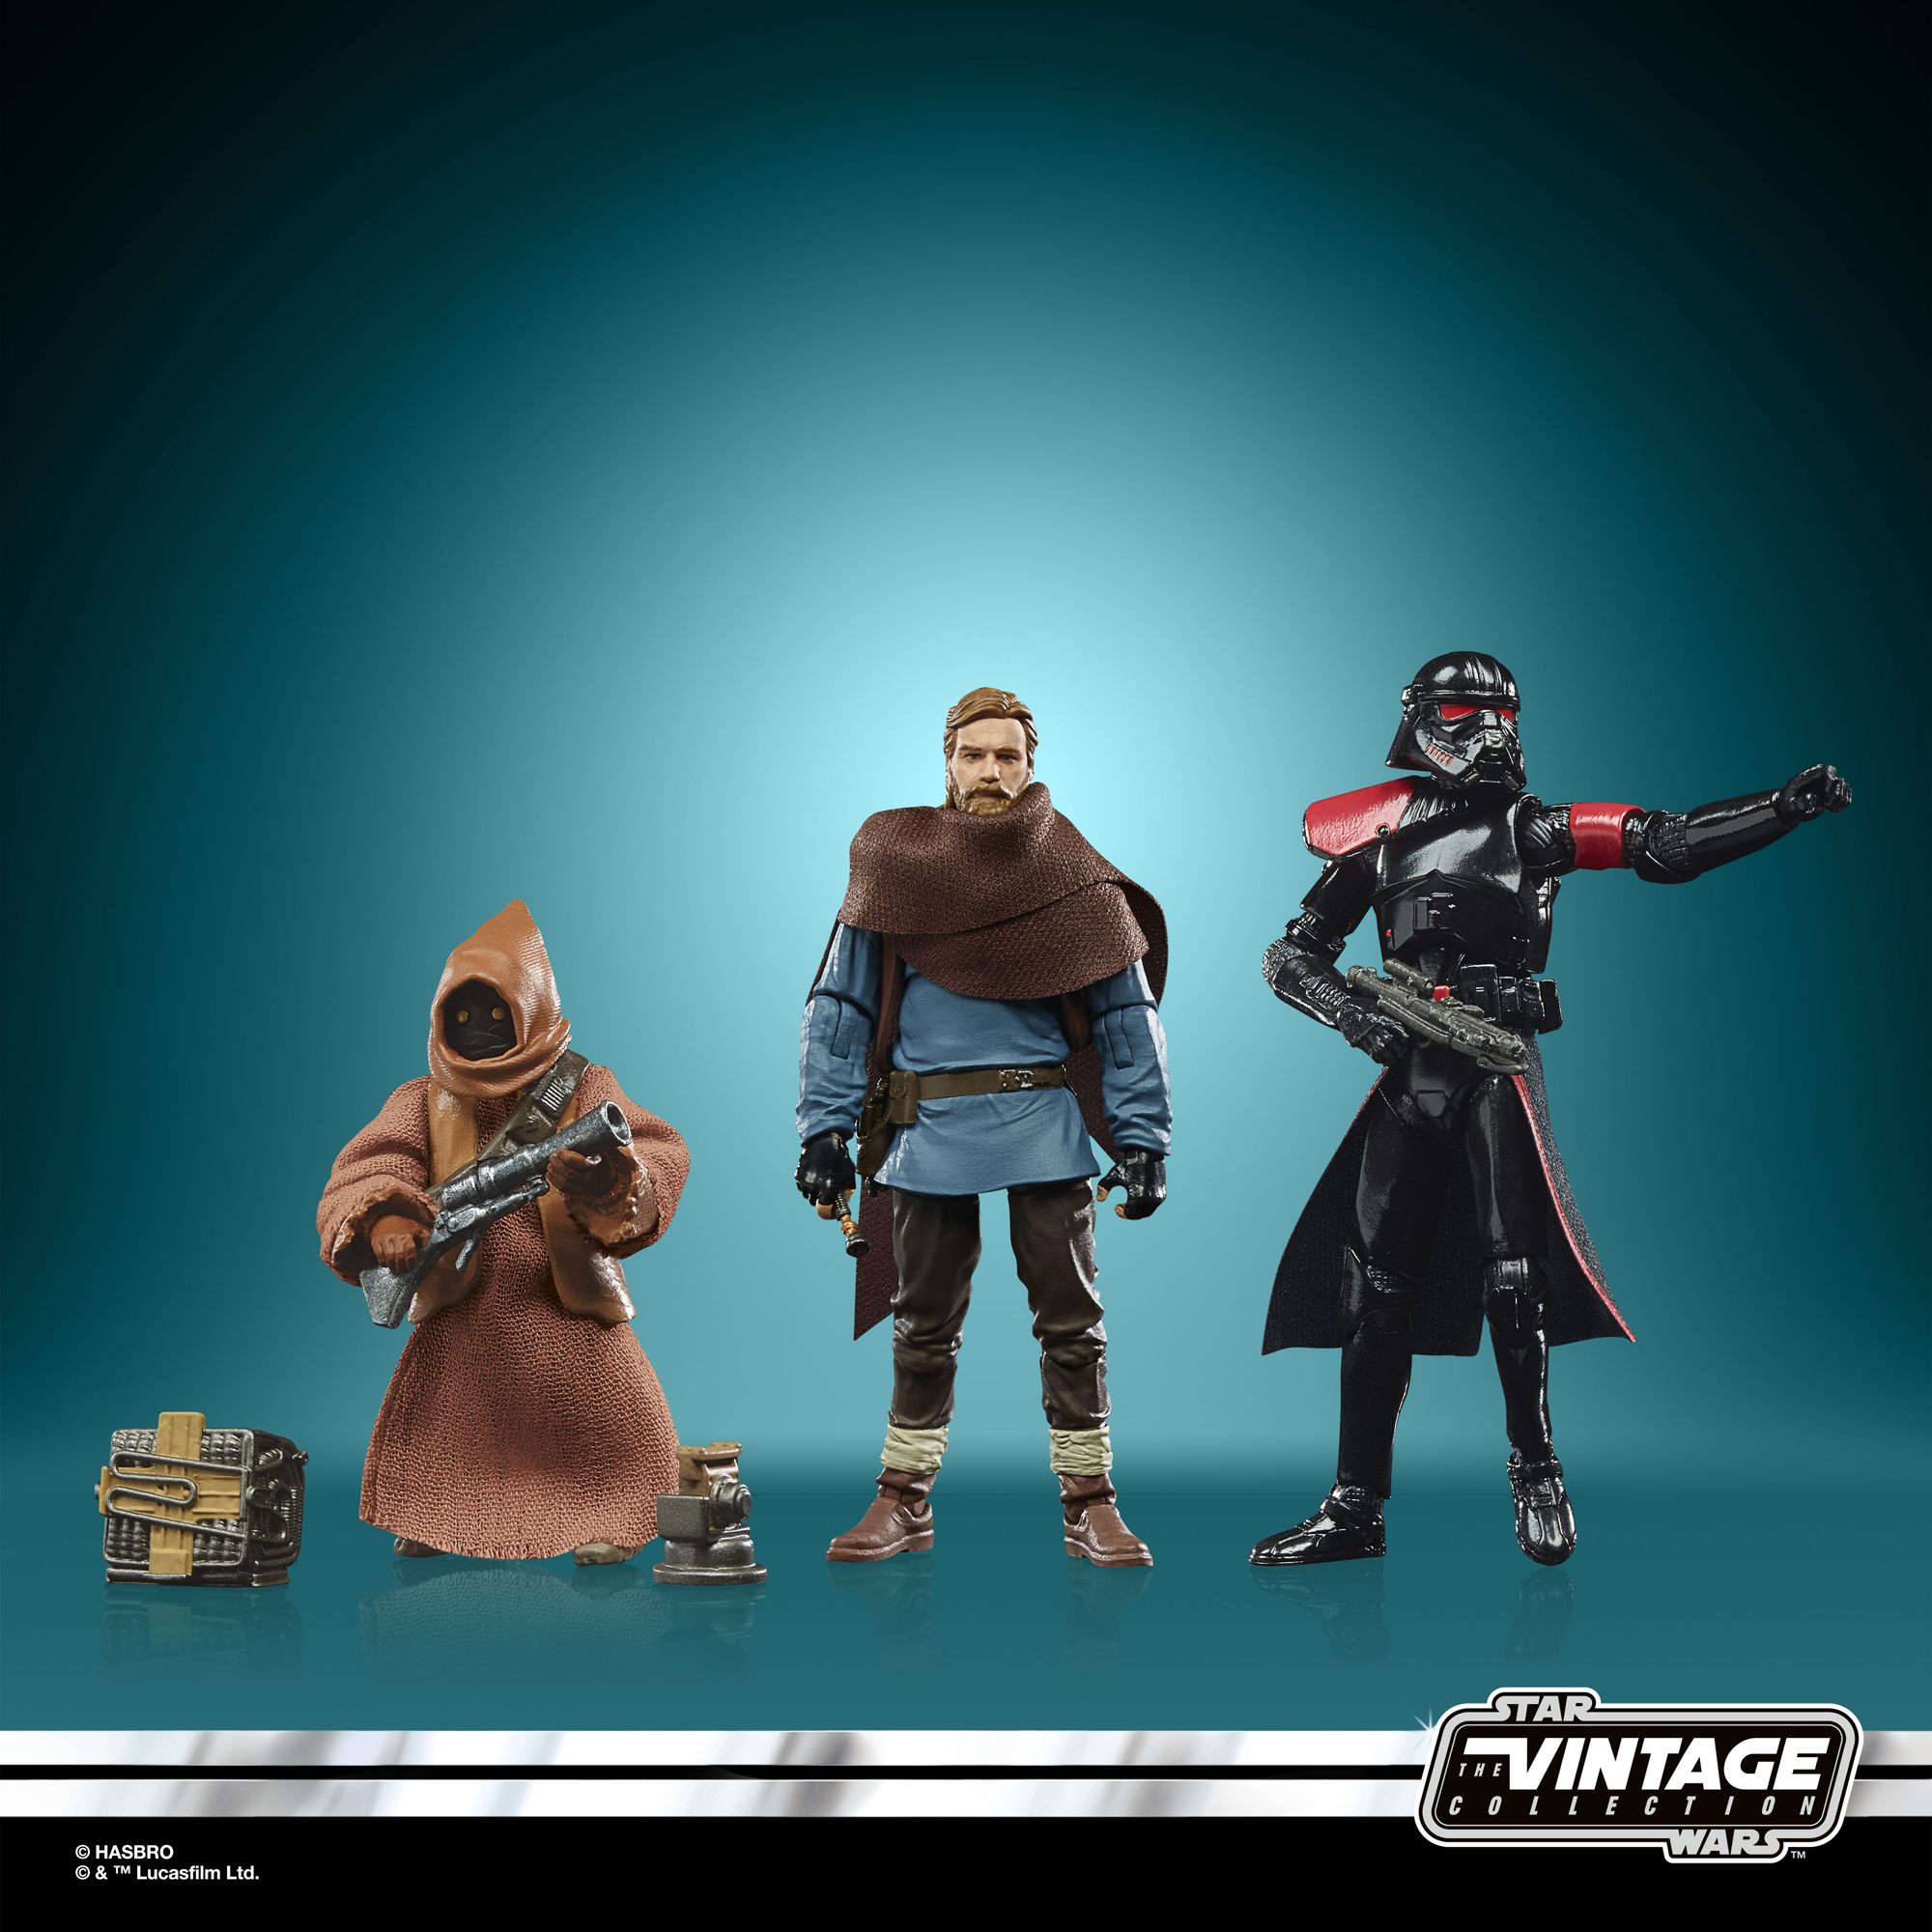 Obi-Wan Kenobi: New Vintage Collection and Black Series figures revealed